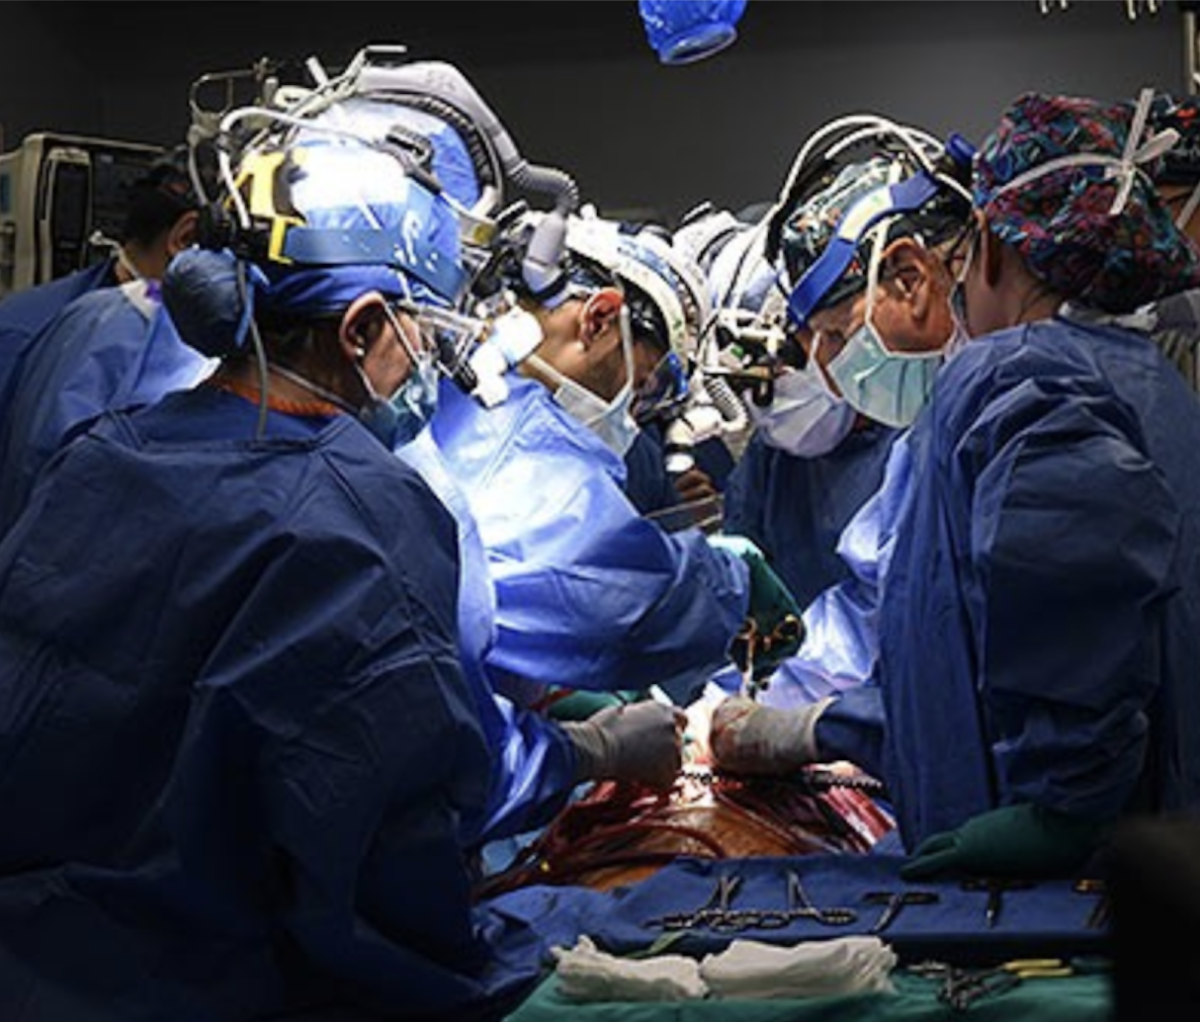 Xenotransplant surgery in progress. Image courtesy of the University of Maryland School of Medicine 